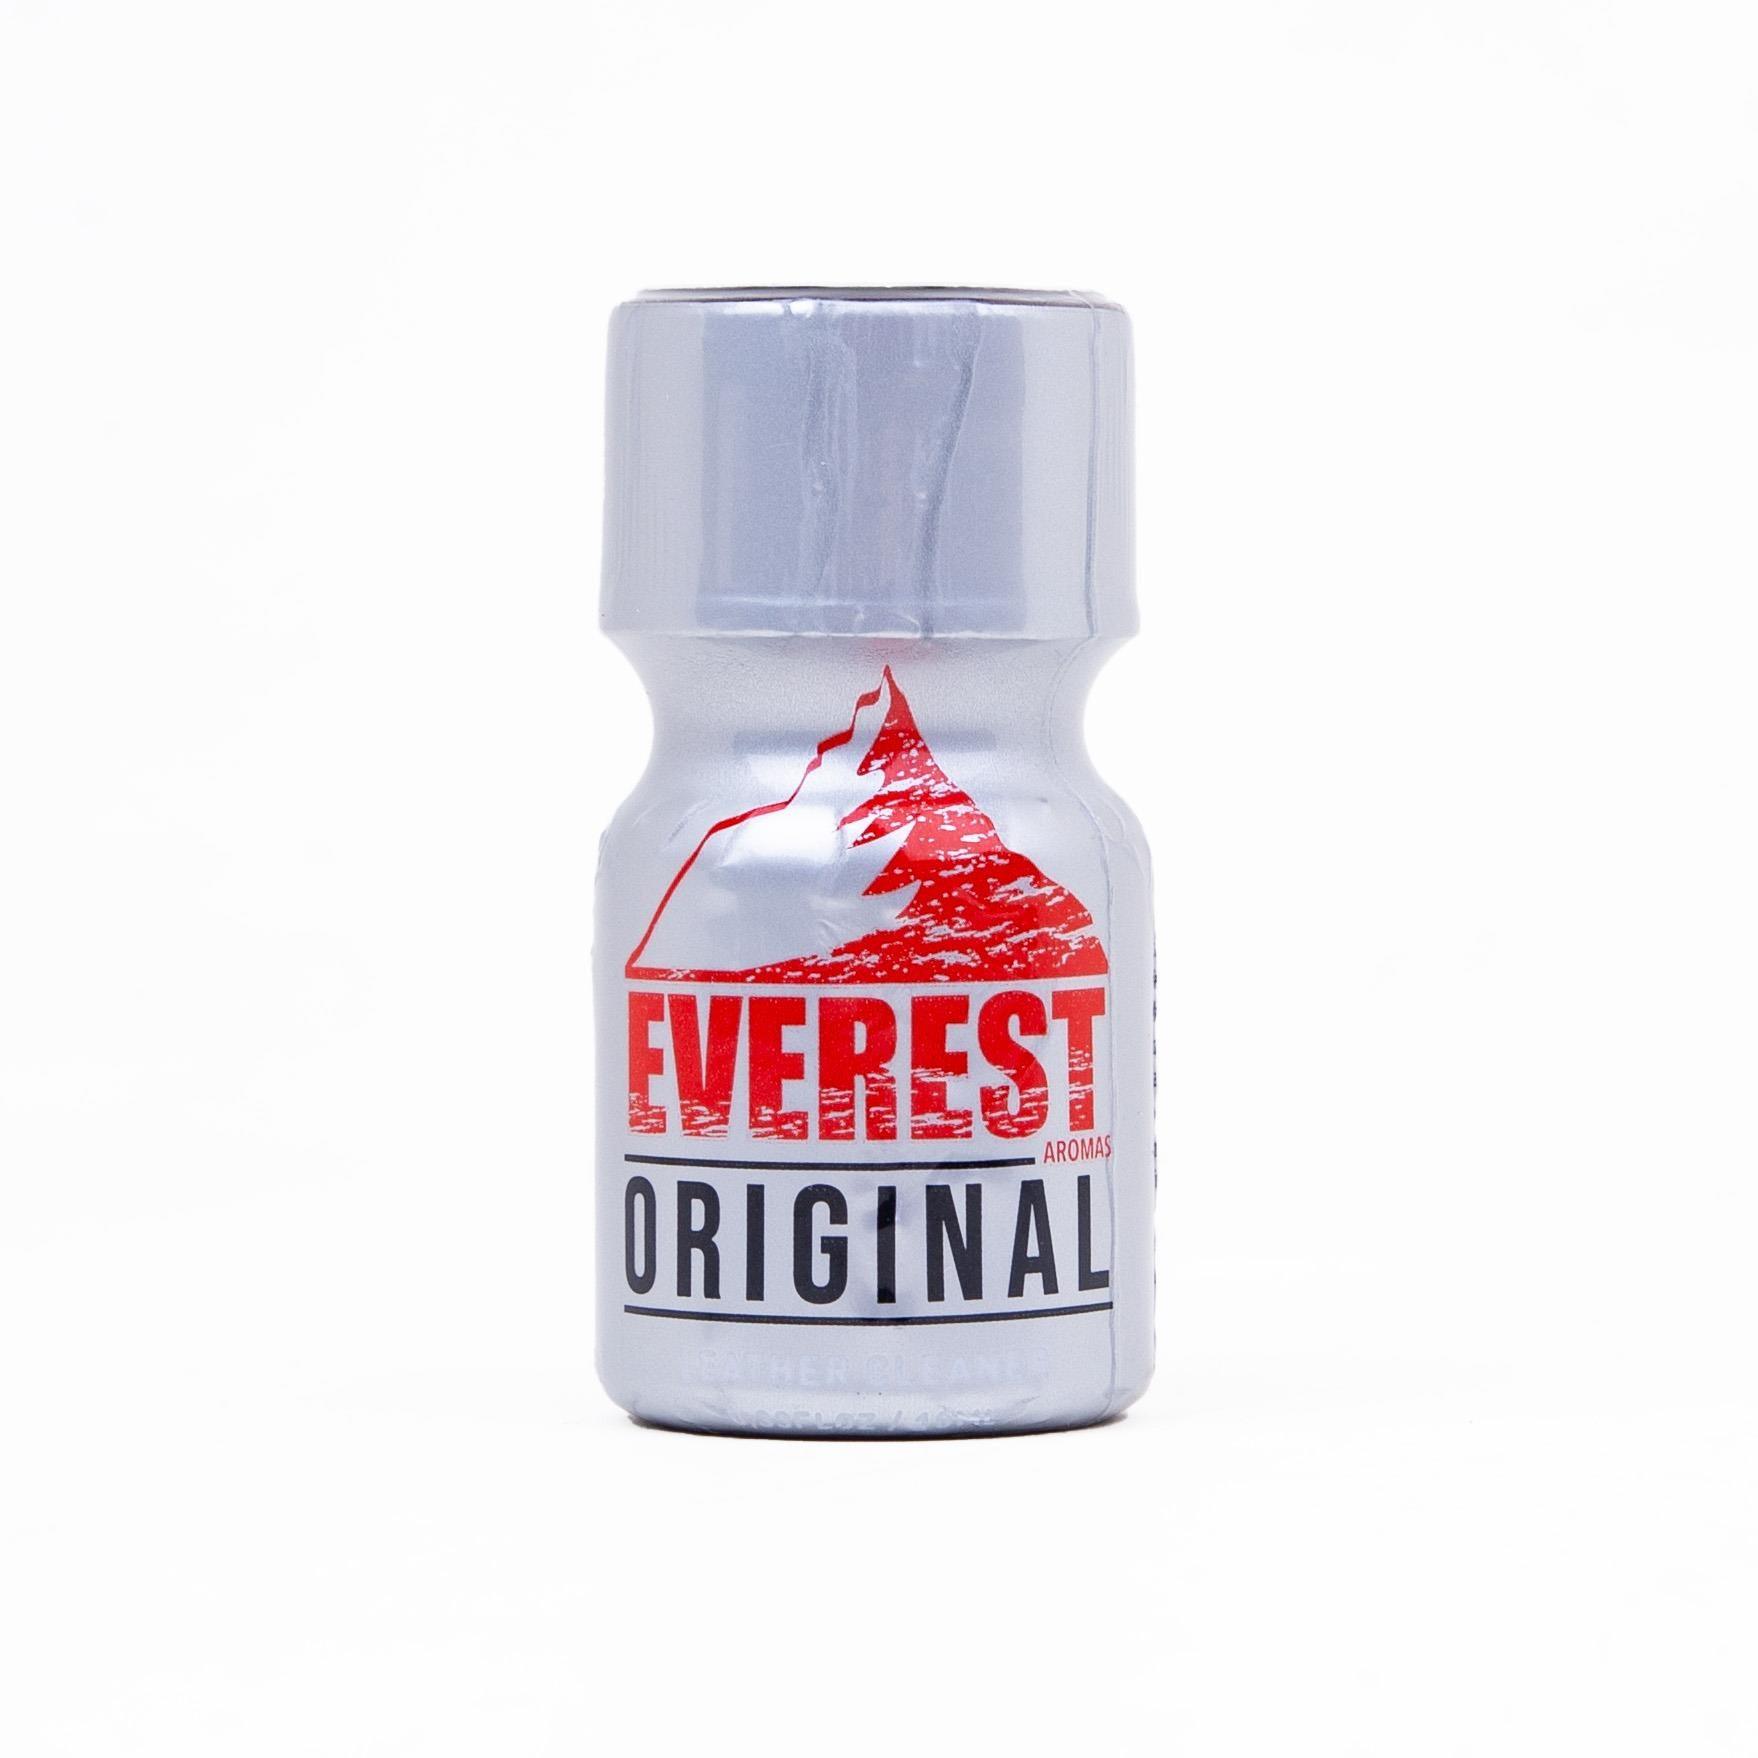 Everest Original, 10ml by Everest